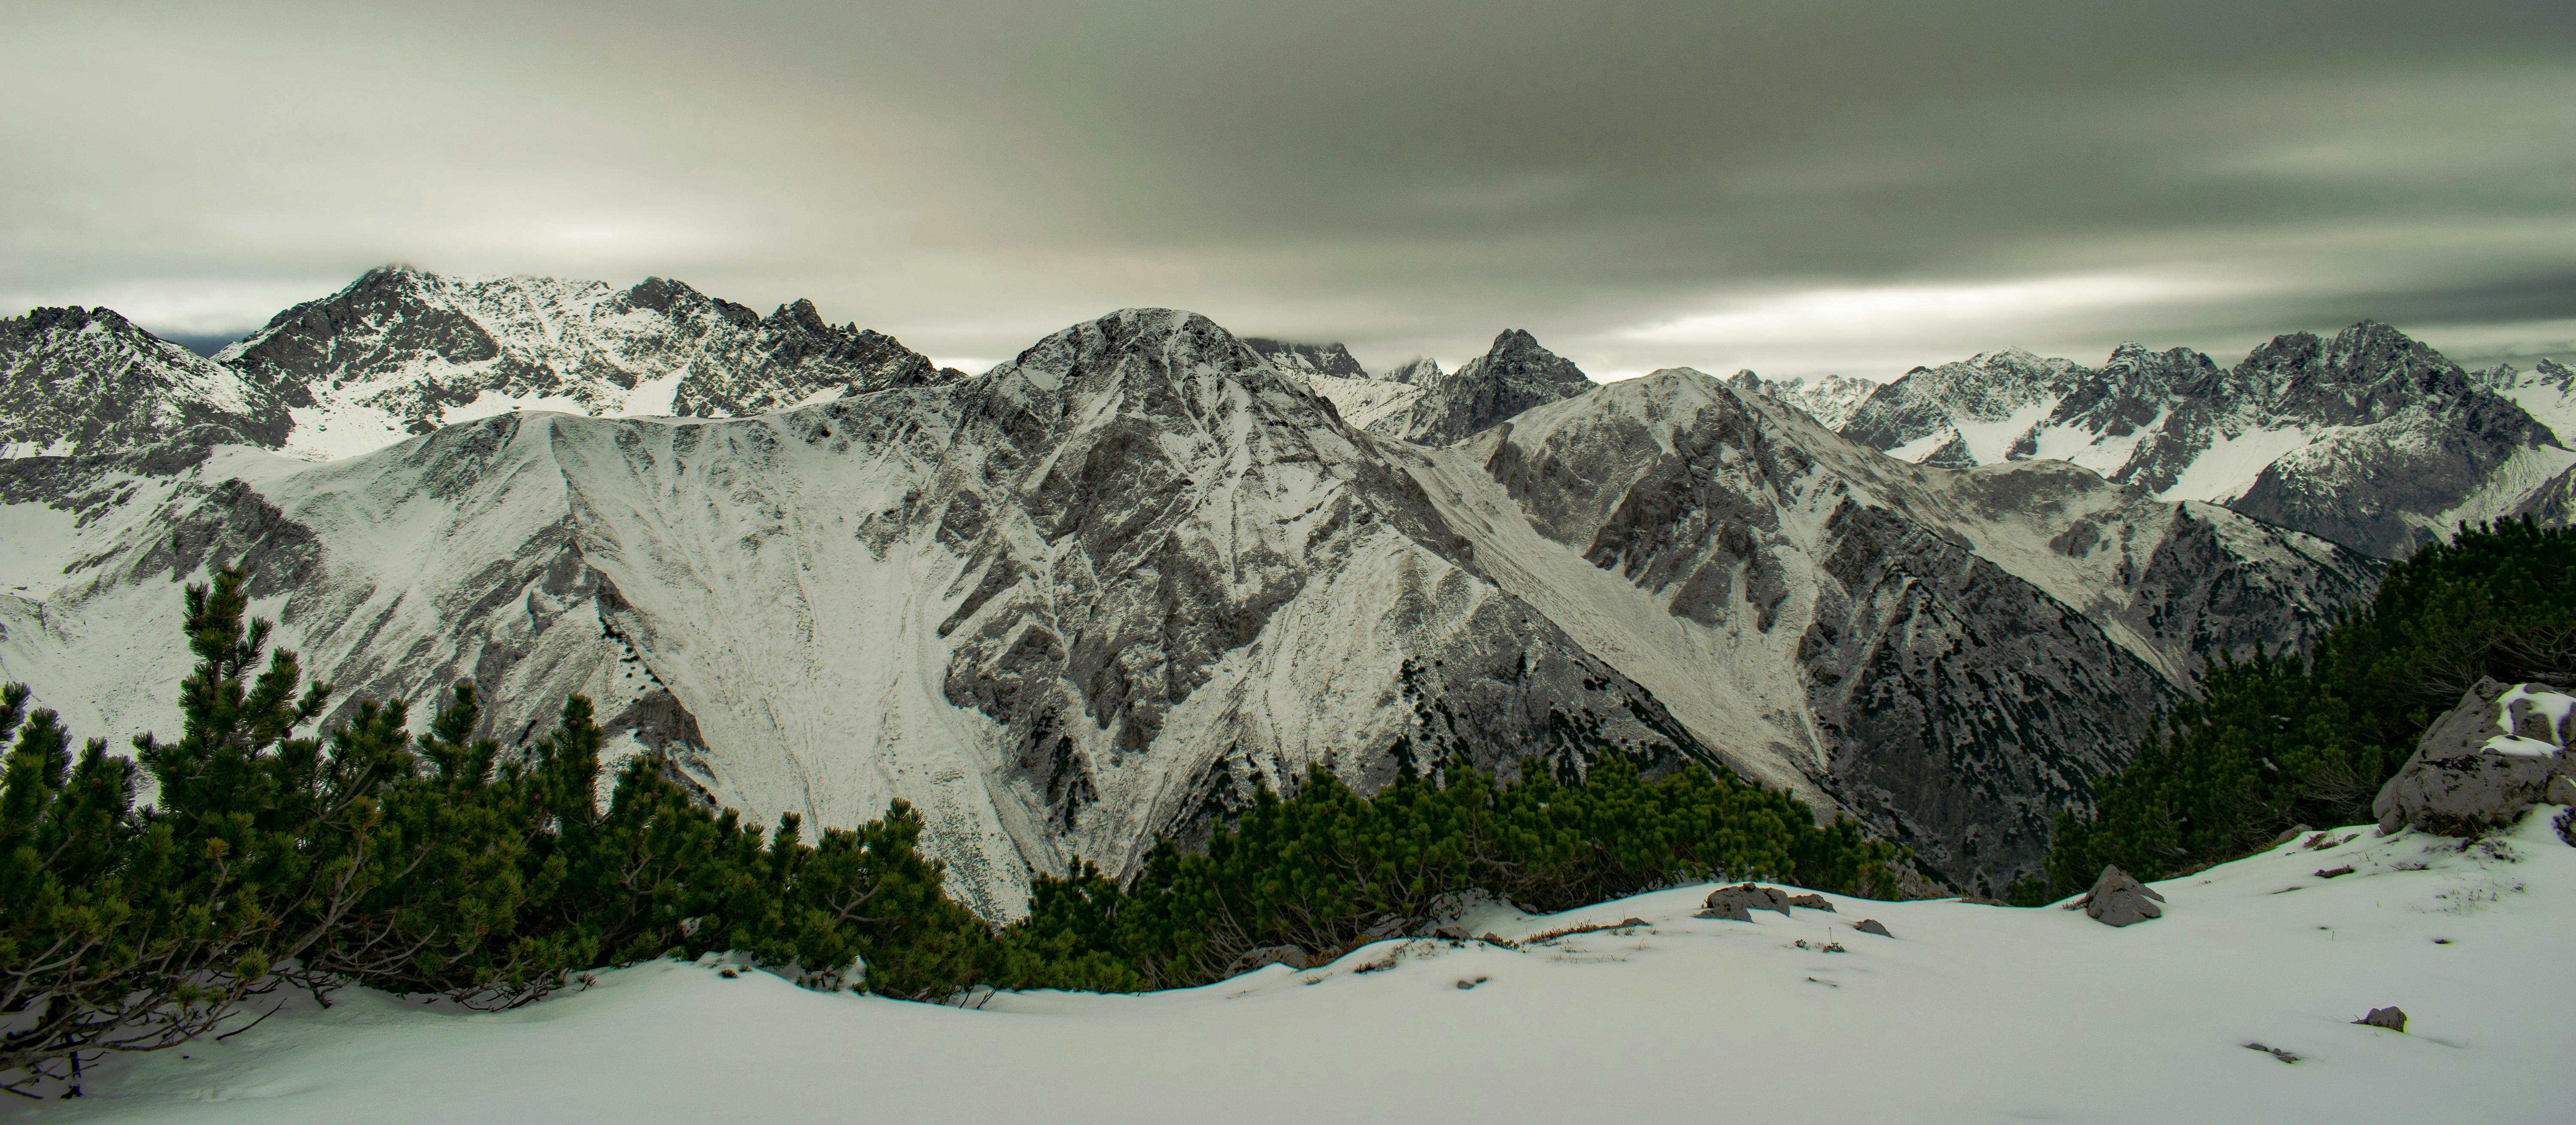 Rocky Mountain With Snow · Free Stock Photo